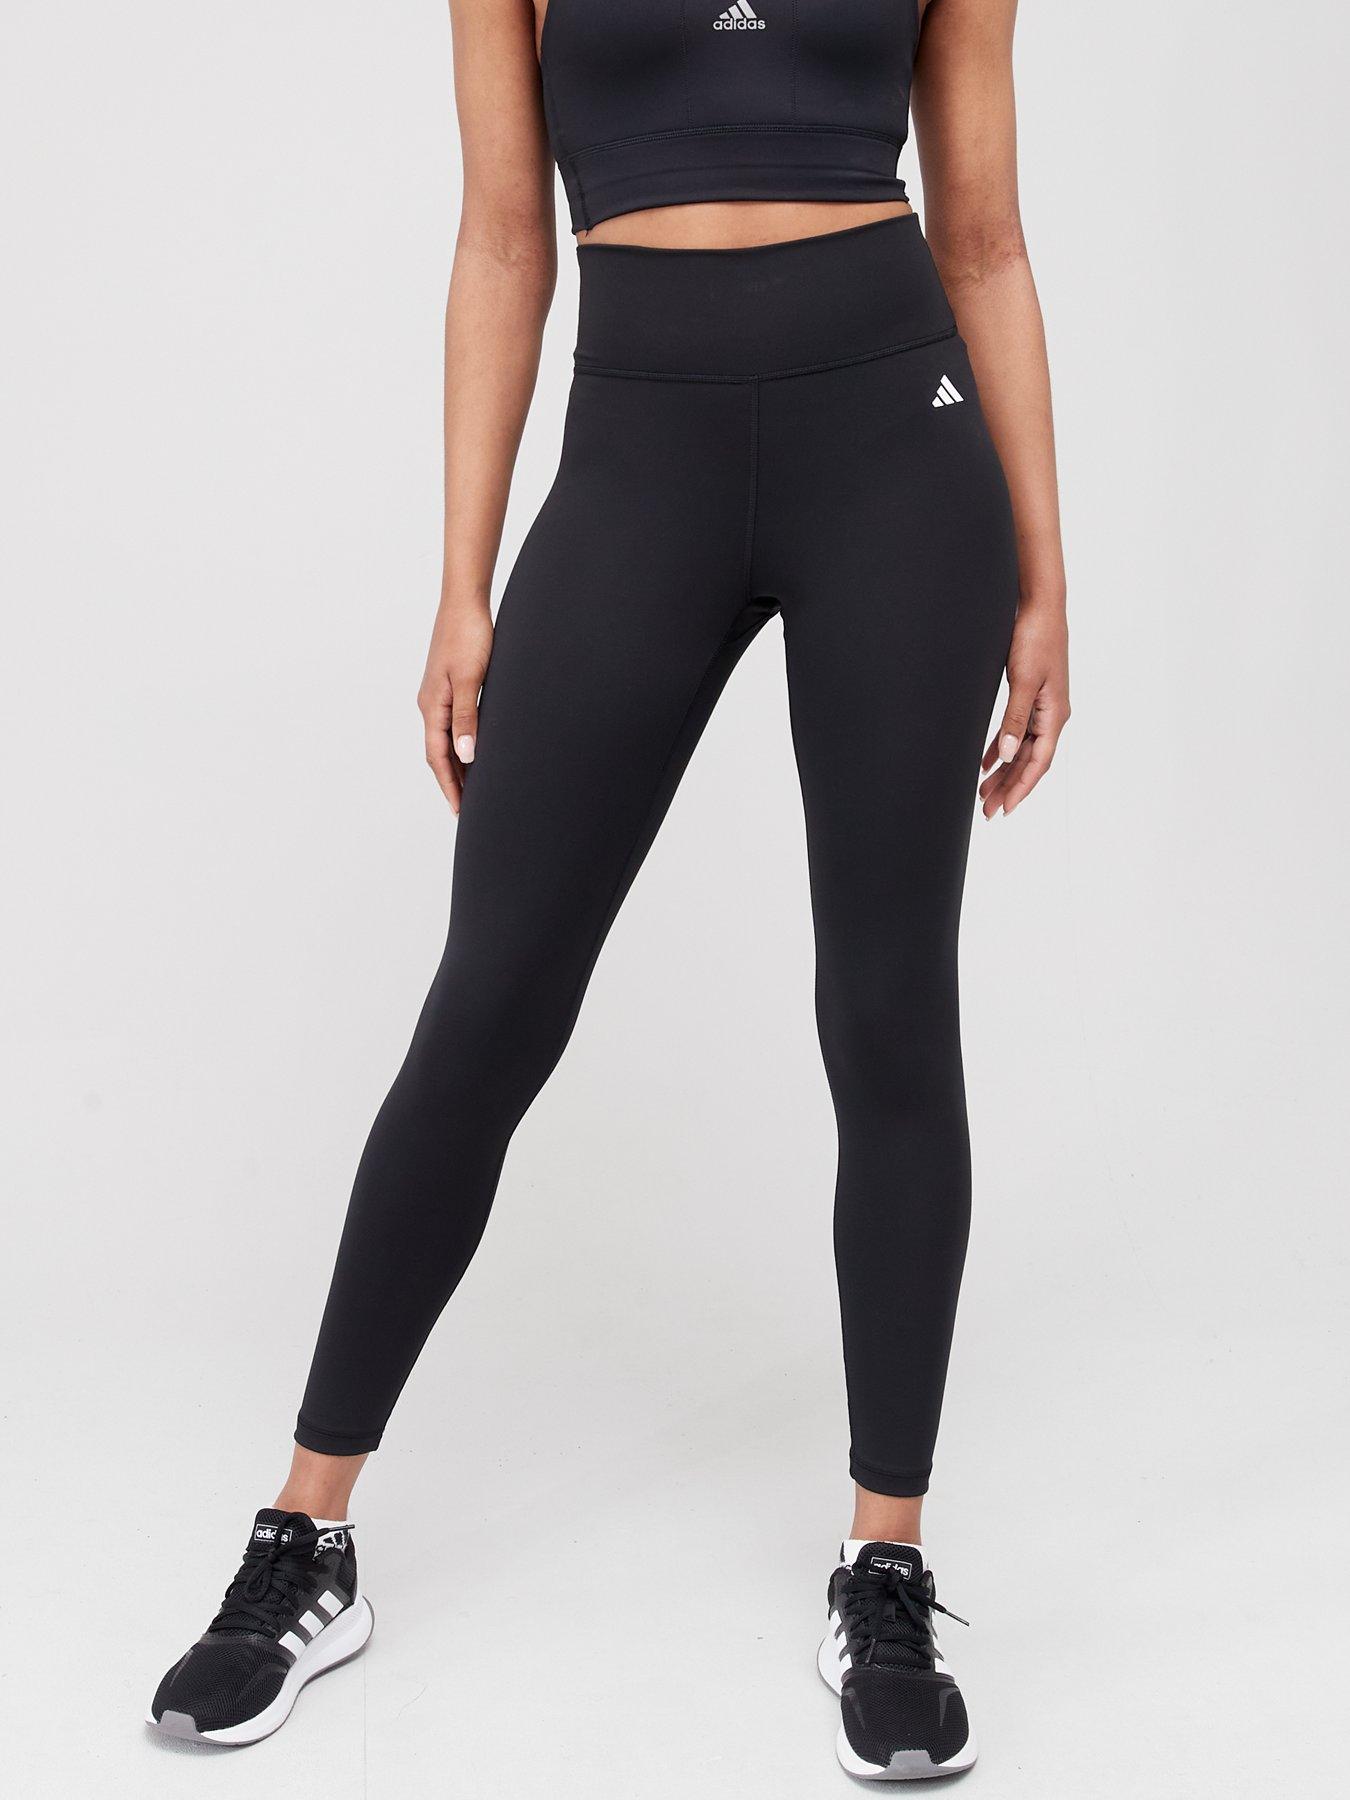 NWT Women's Adidas Black 3 Stripe Leggings Climalite Size Large